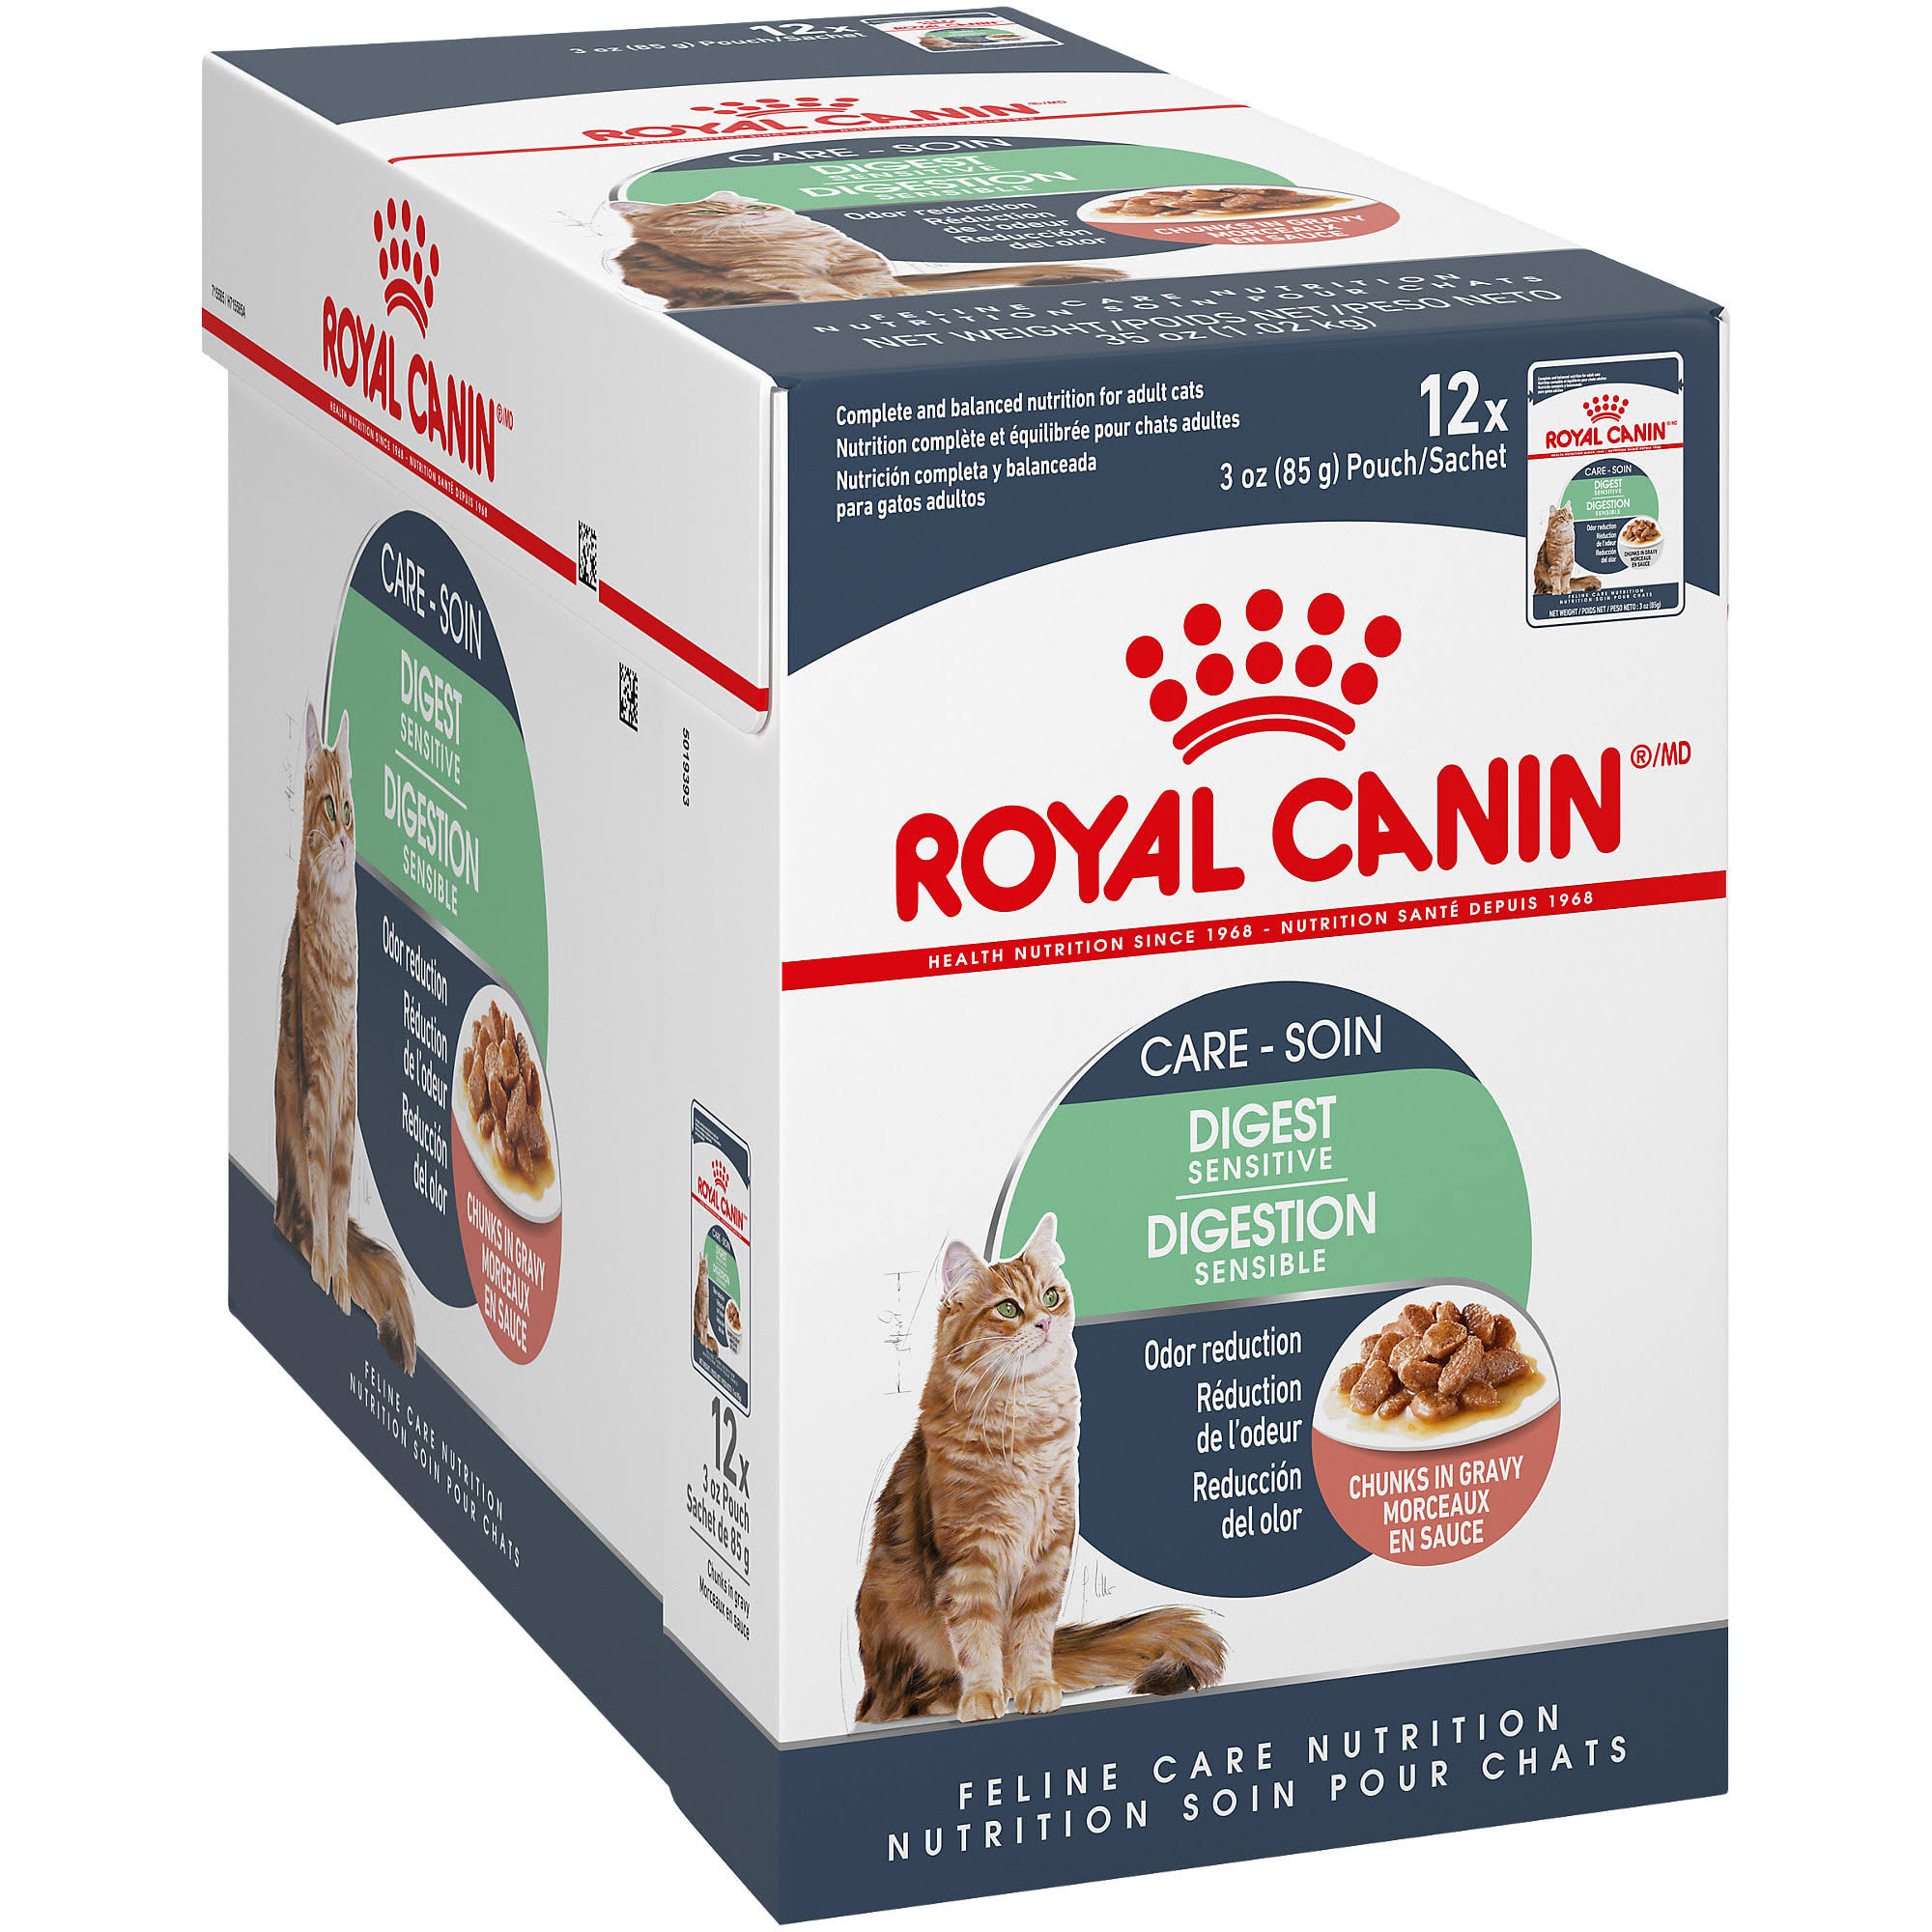 Royal Canin Feline Care Nutrition Digest Sensitive Chunks in Gravy Pouch Cat Food